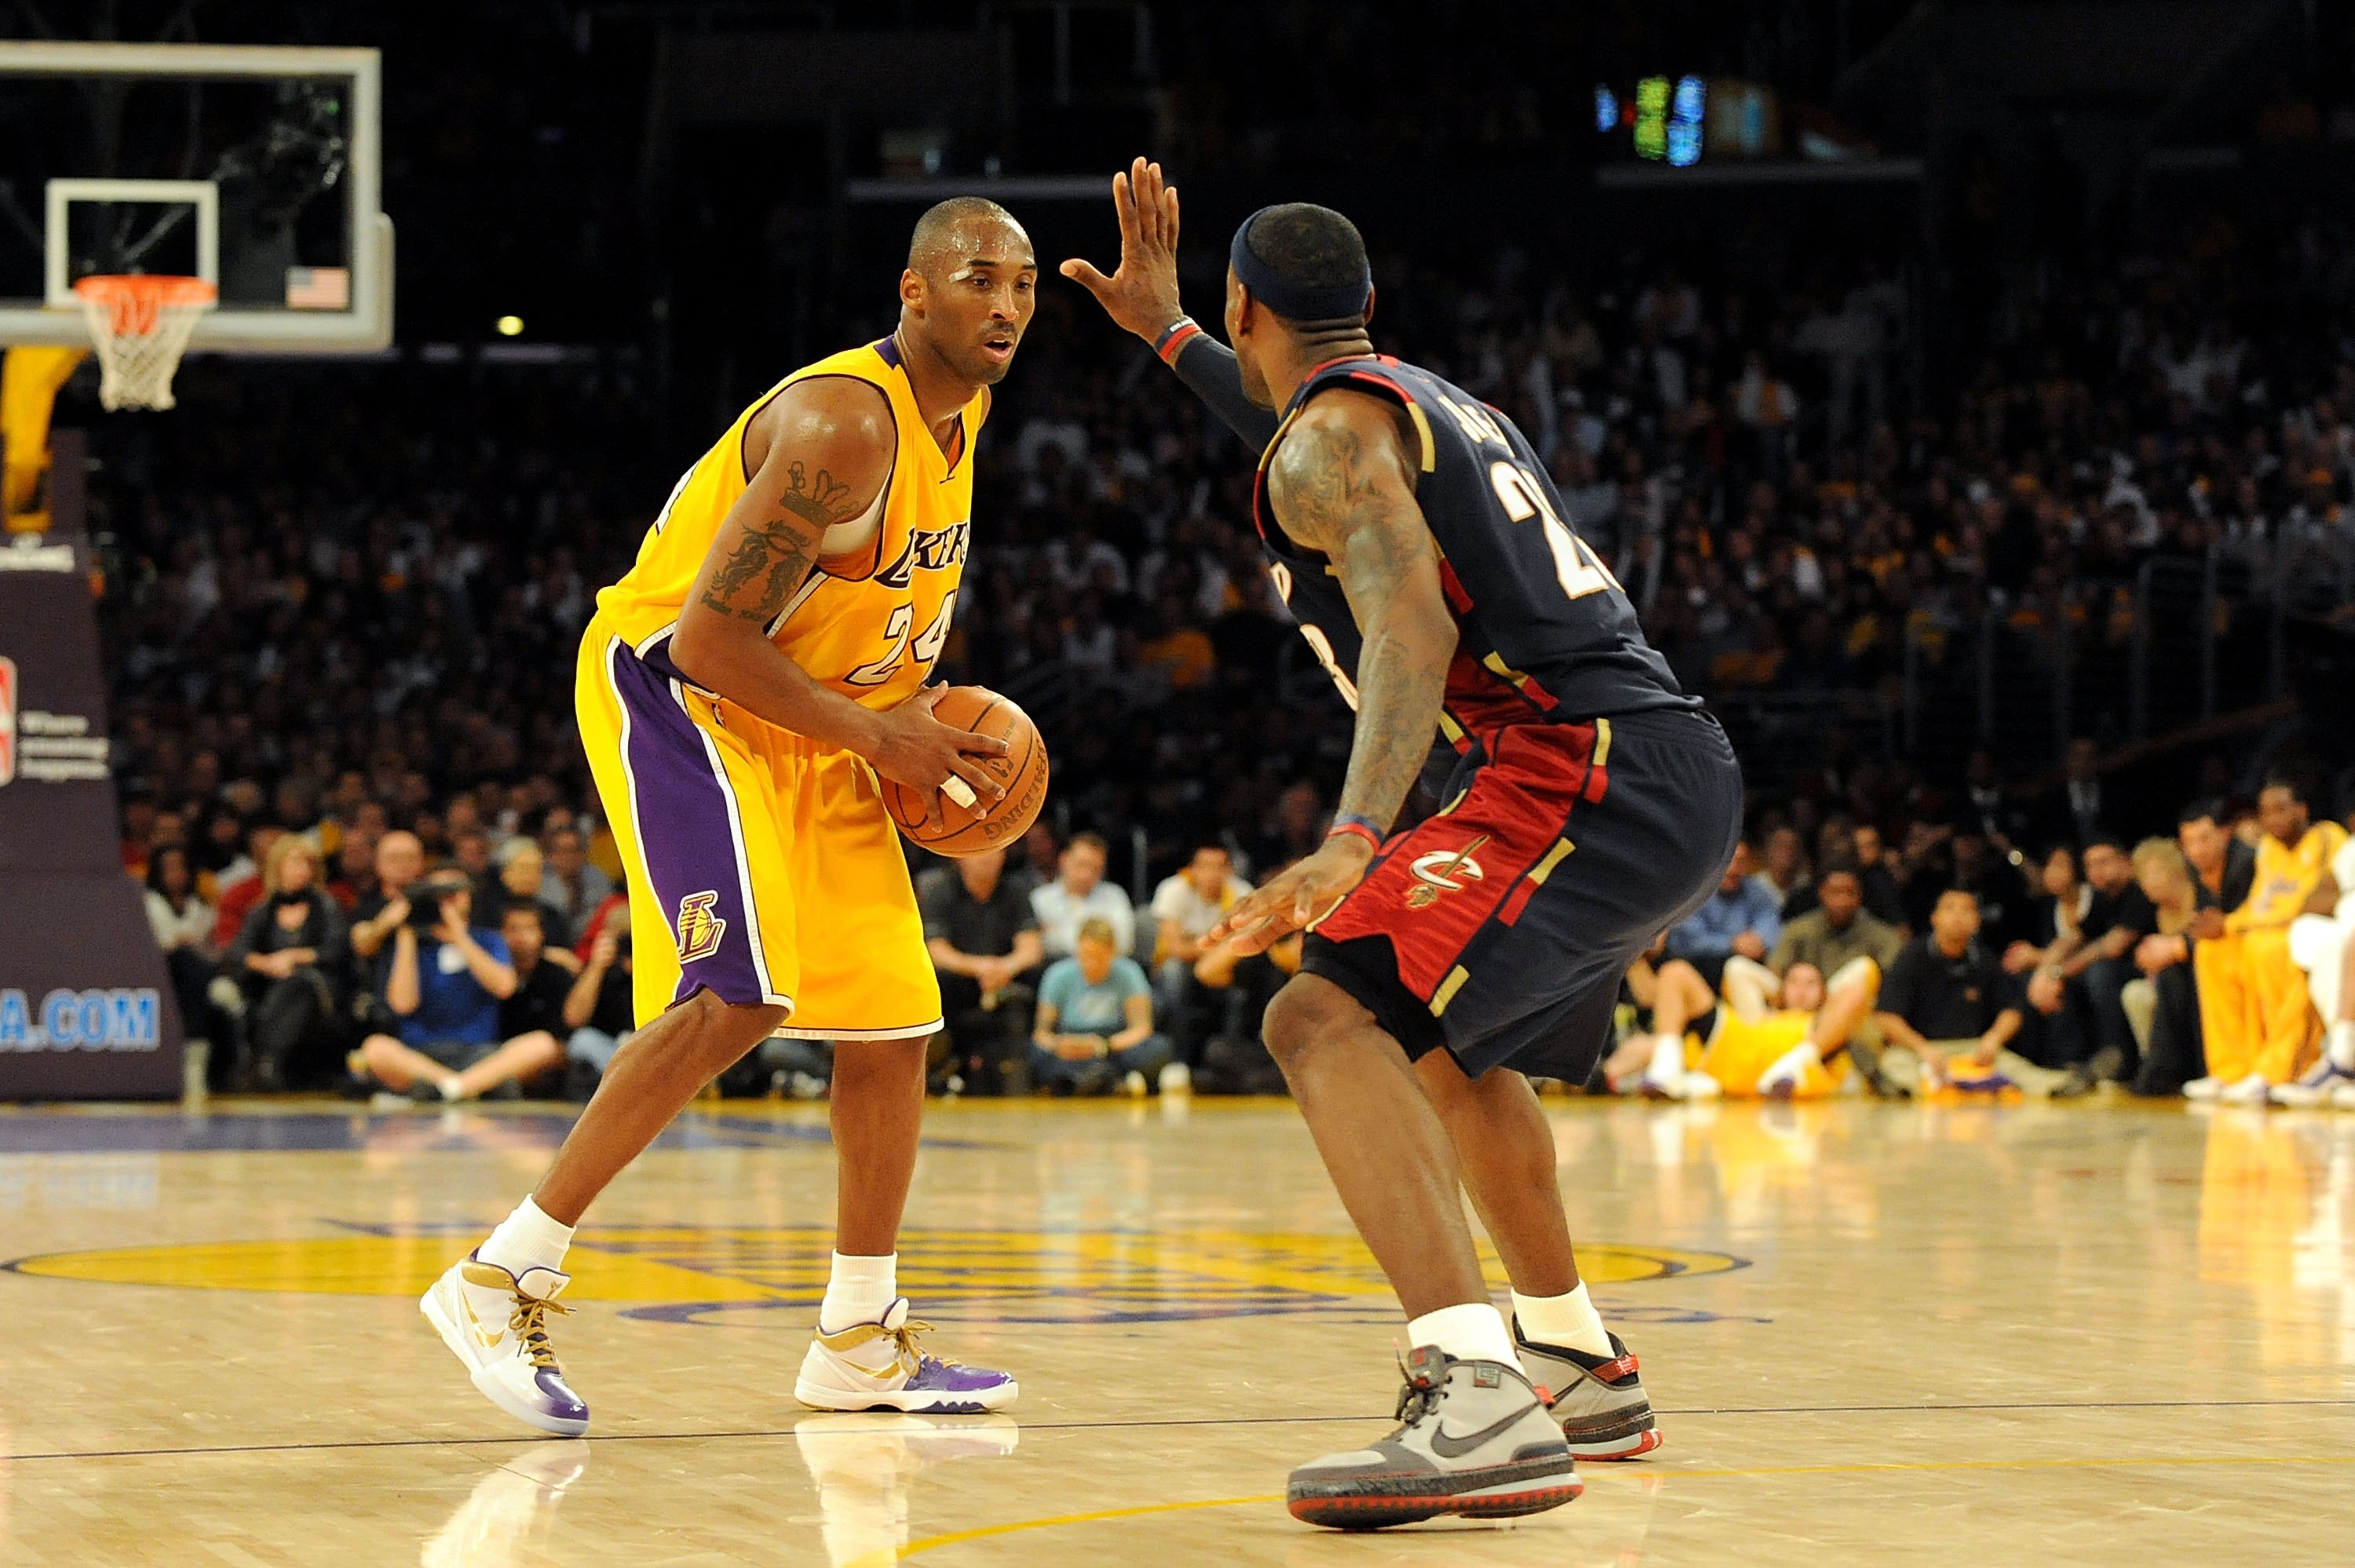 Kobe Bryant vs. LeBron James. The Greatest NBA Finals Matchup That